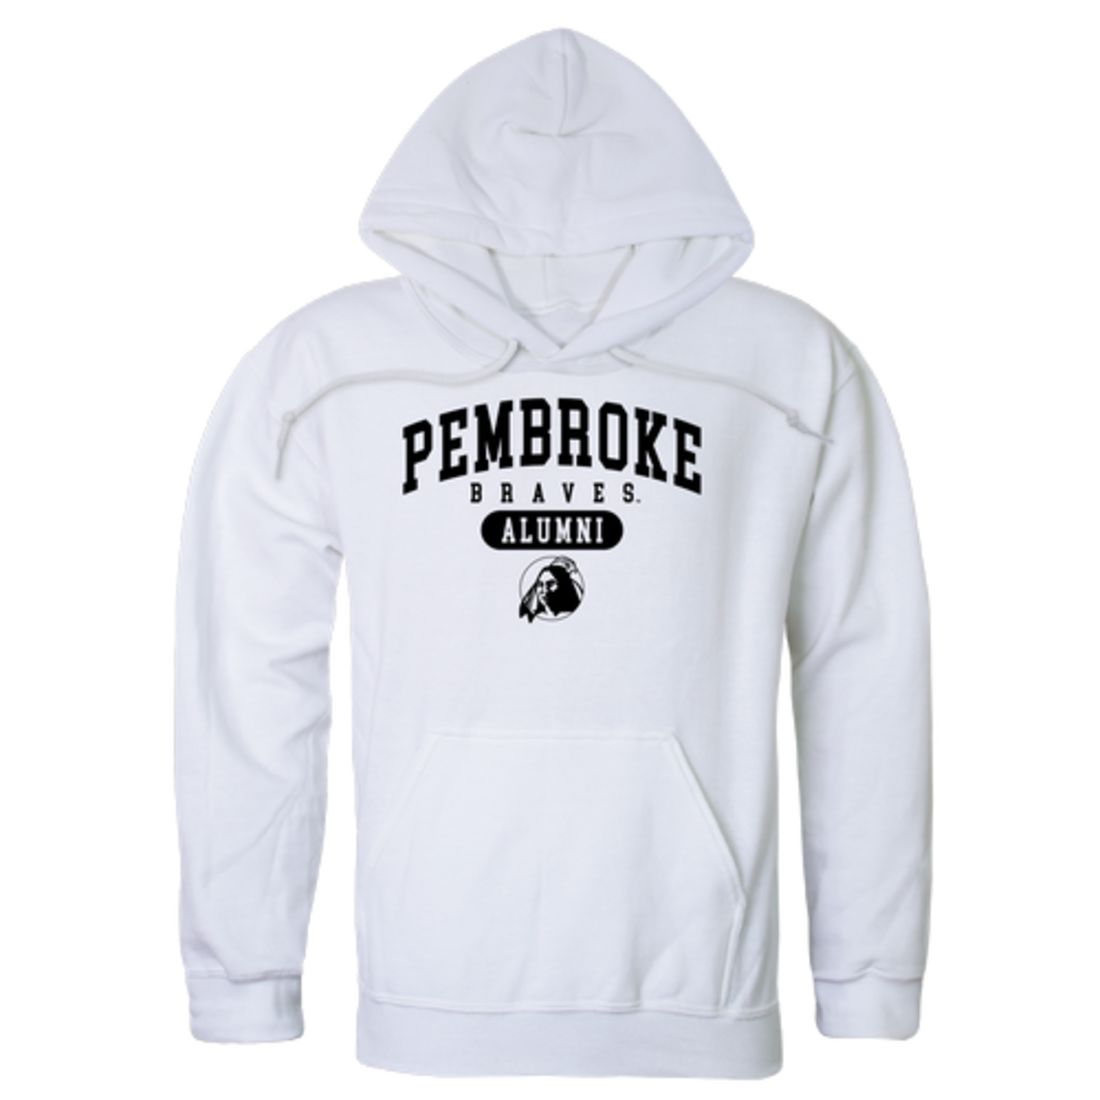 UNCP University of North Carolina at Pembroke Braves Alumni Fleece Hoodie Sweatshirts Black-Campus-Wardrobe